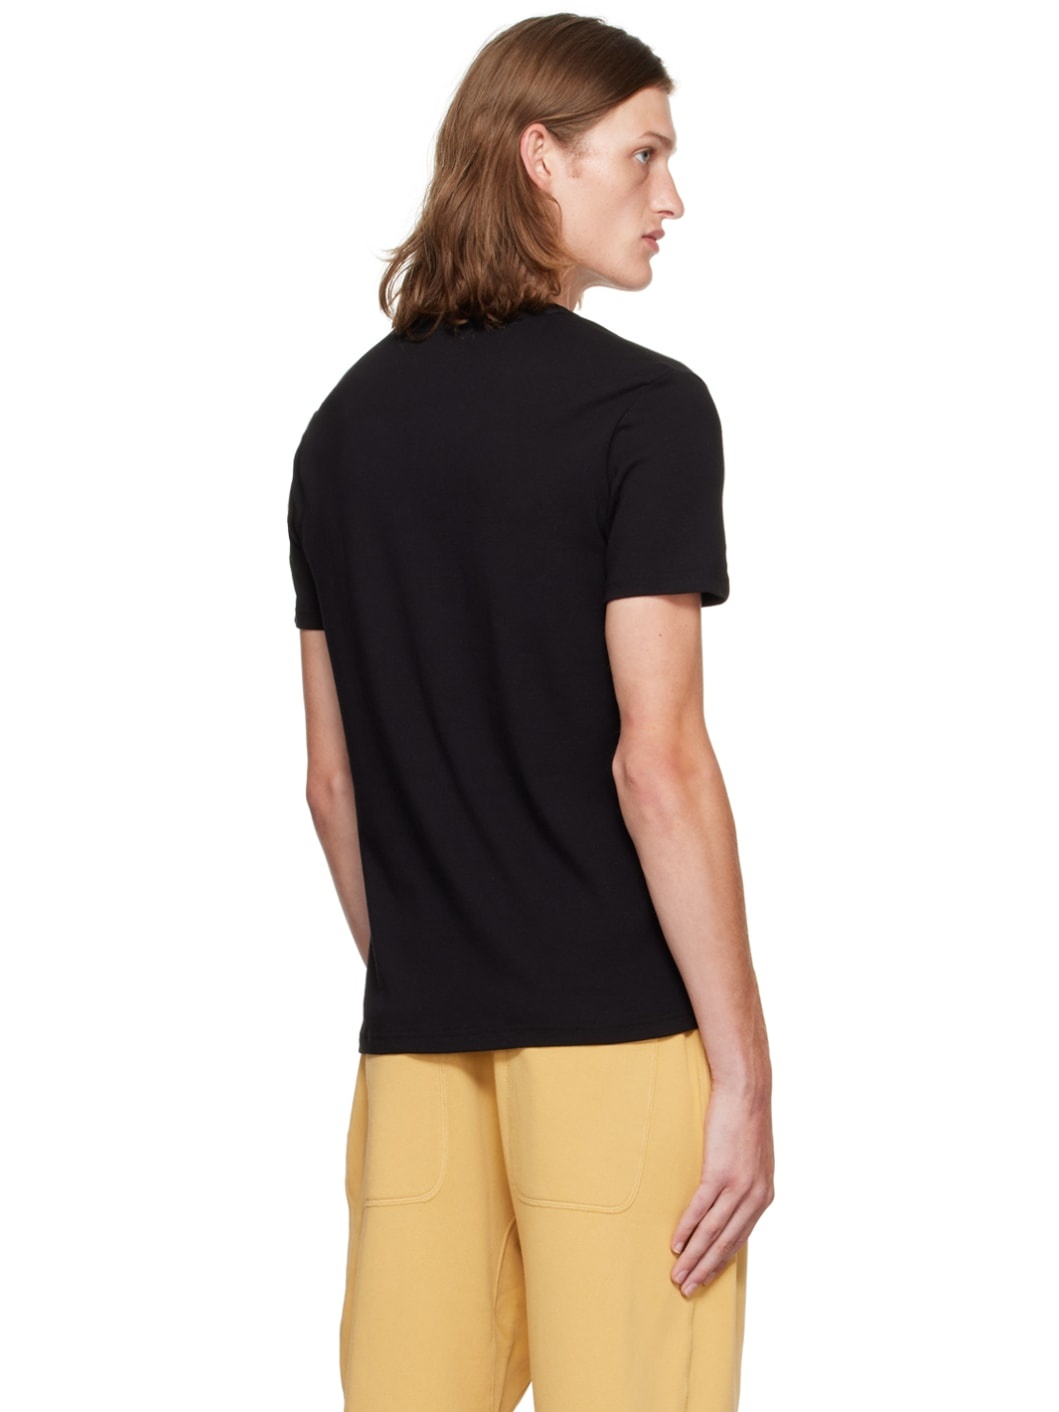 Black V-Neck T-Shirt - 3